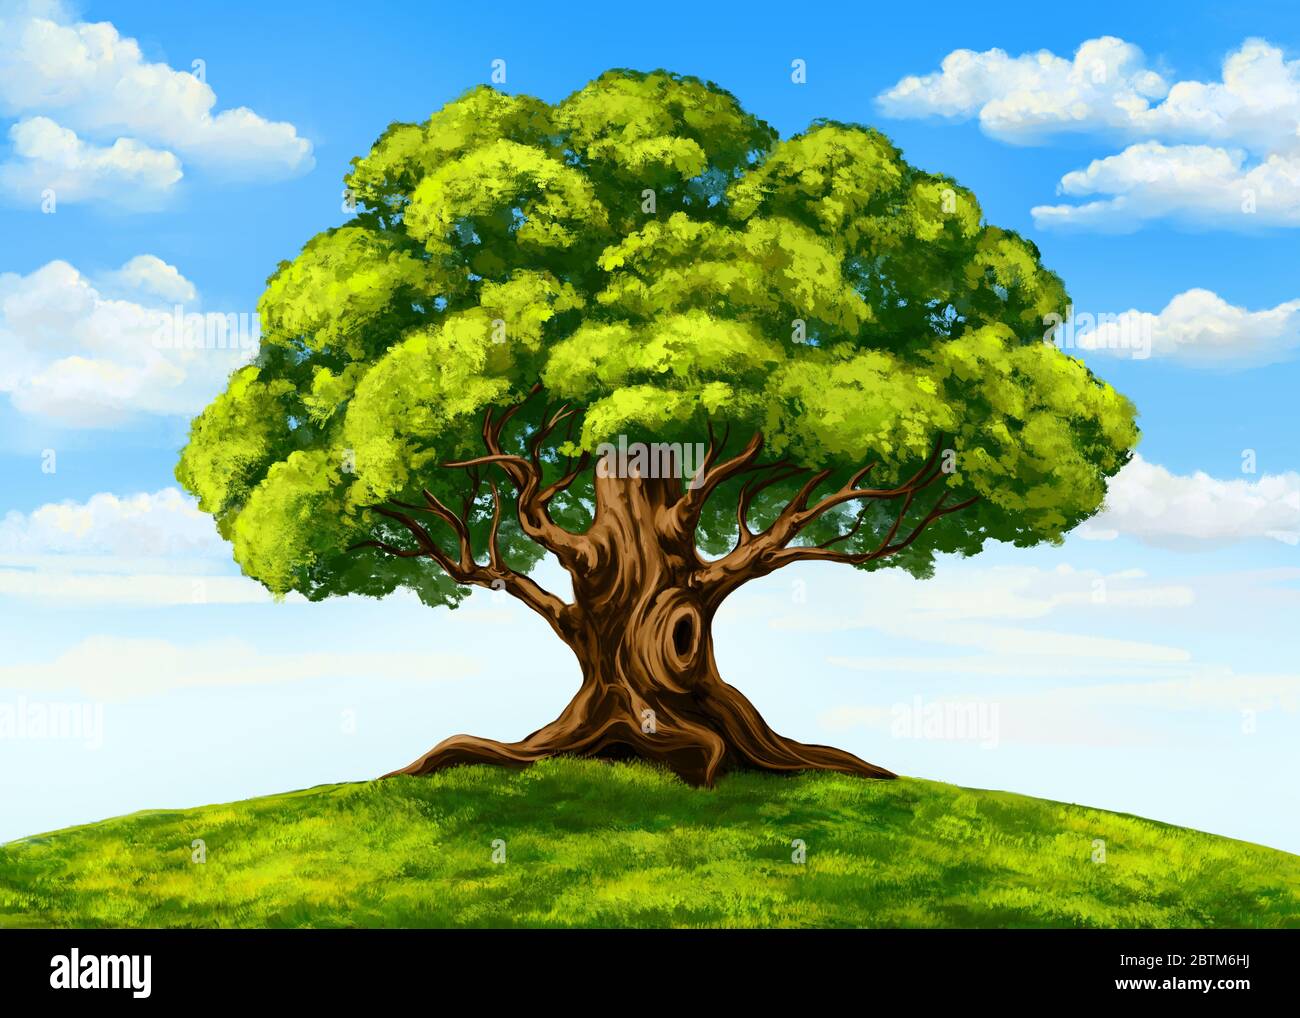 arbre vert contre un ciel bleu avec des nuages, belle nature, dessin à la main dessin art illustration peinte avec aquarelles. Banque D'Images